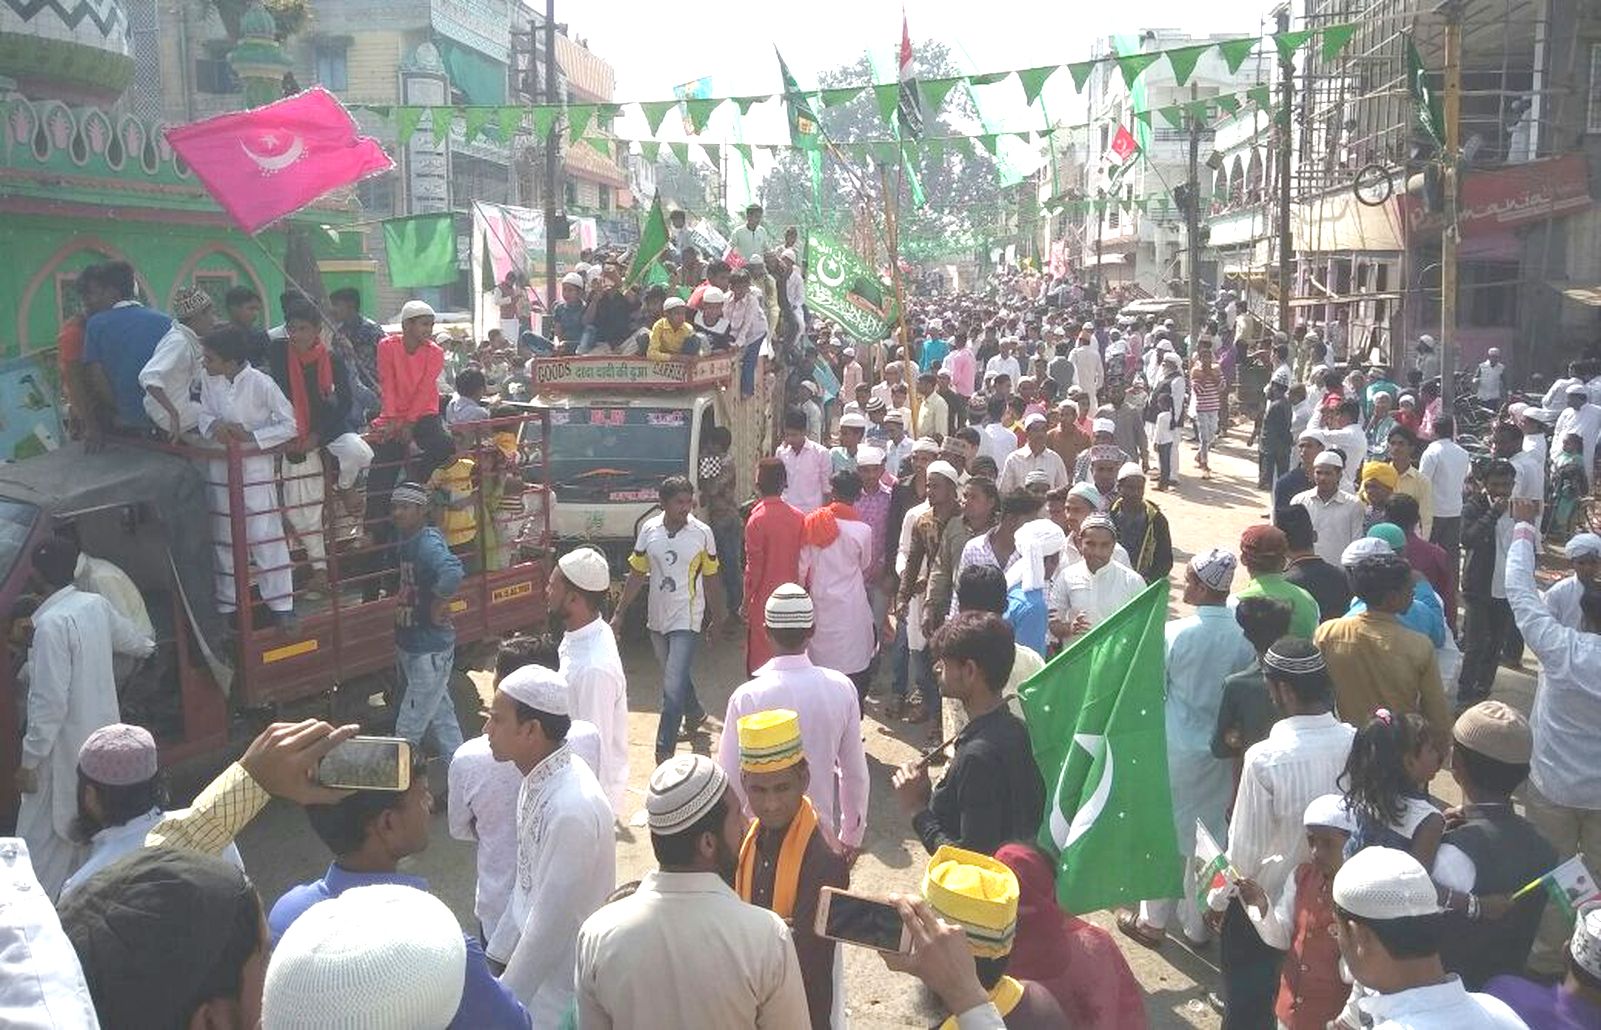  Eid celebrated in celebration of Miladunnabi